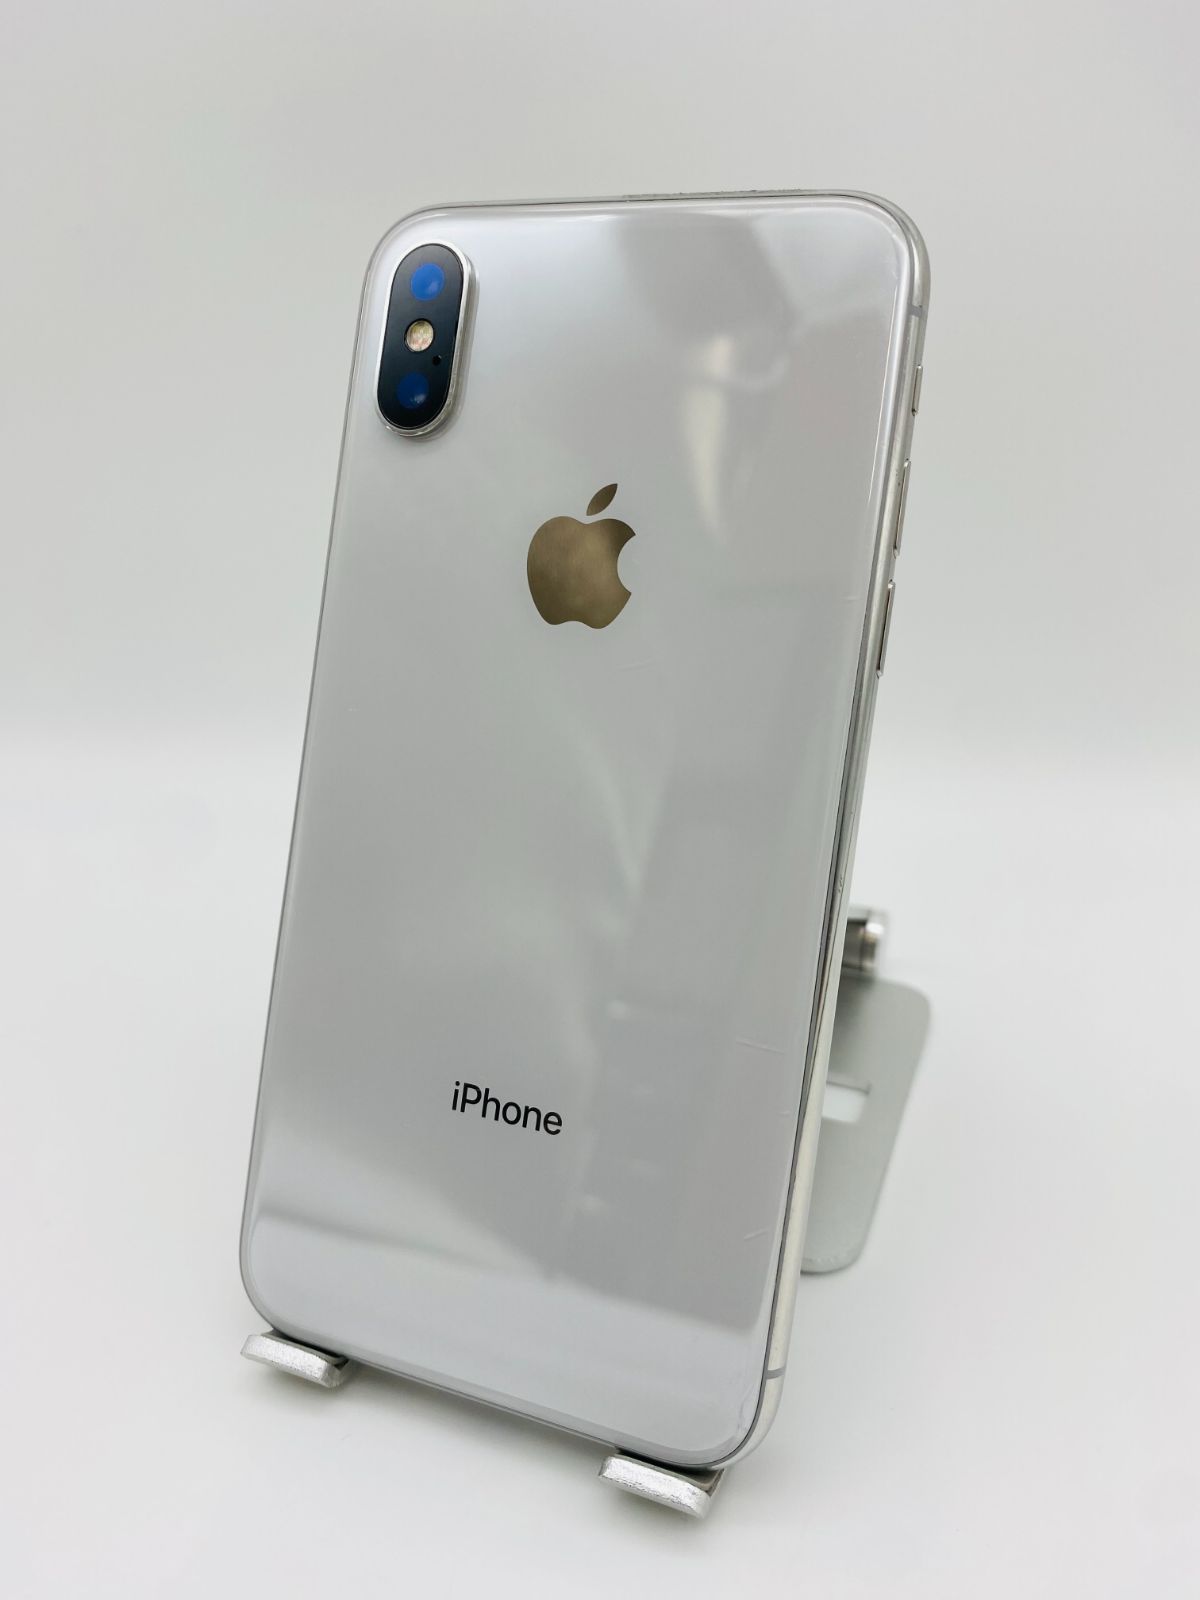 iPhoneX 256GB シルバー/ストア版シムフリー/純正バッテリー94 